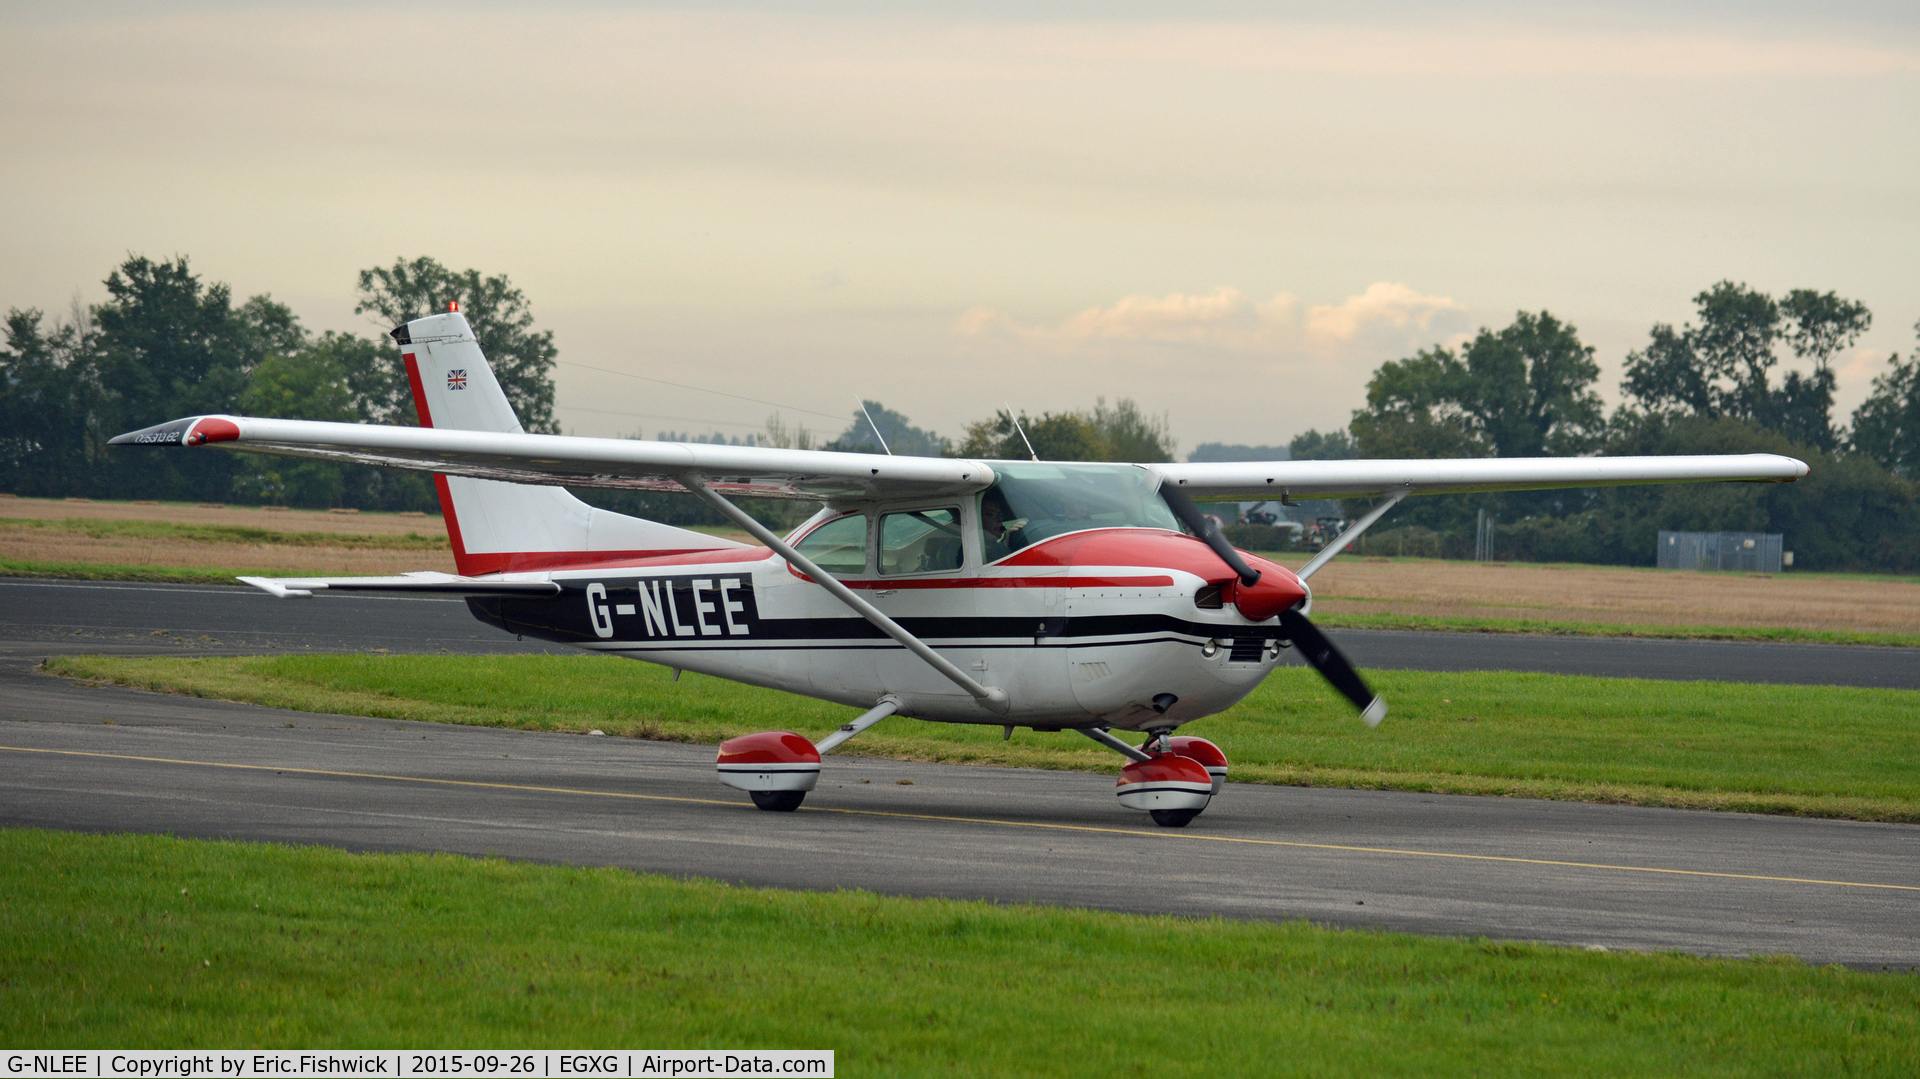 G-NLEE, 1977 Cessna 182Q Skylane C/N 182-65934, 3. G-NLEE arriving at The Yorkshire Air Show, Church Fenton, Sept. 2015.